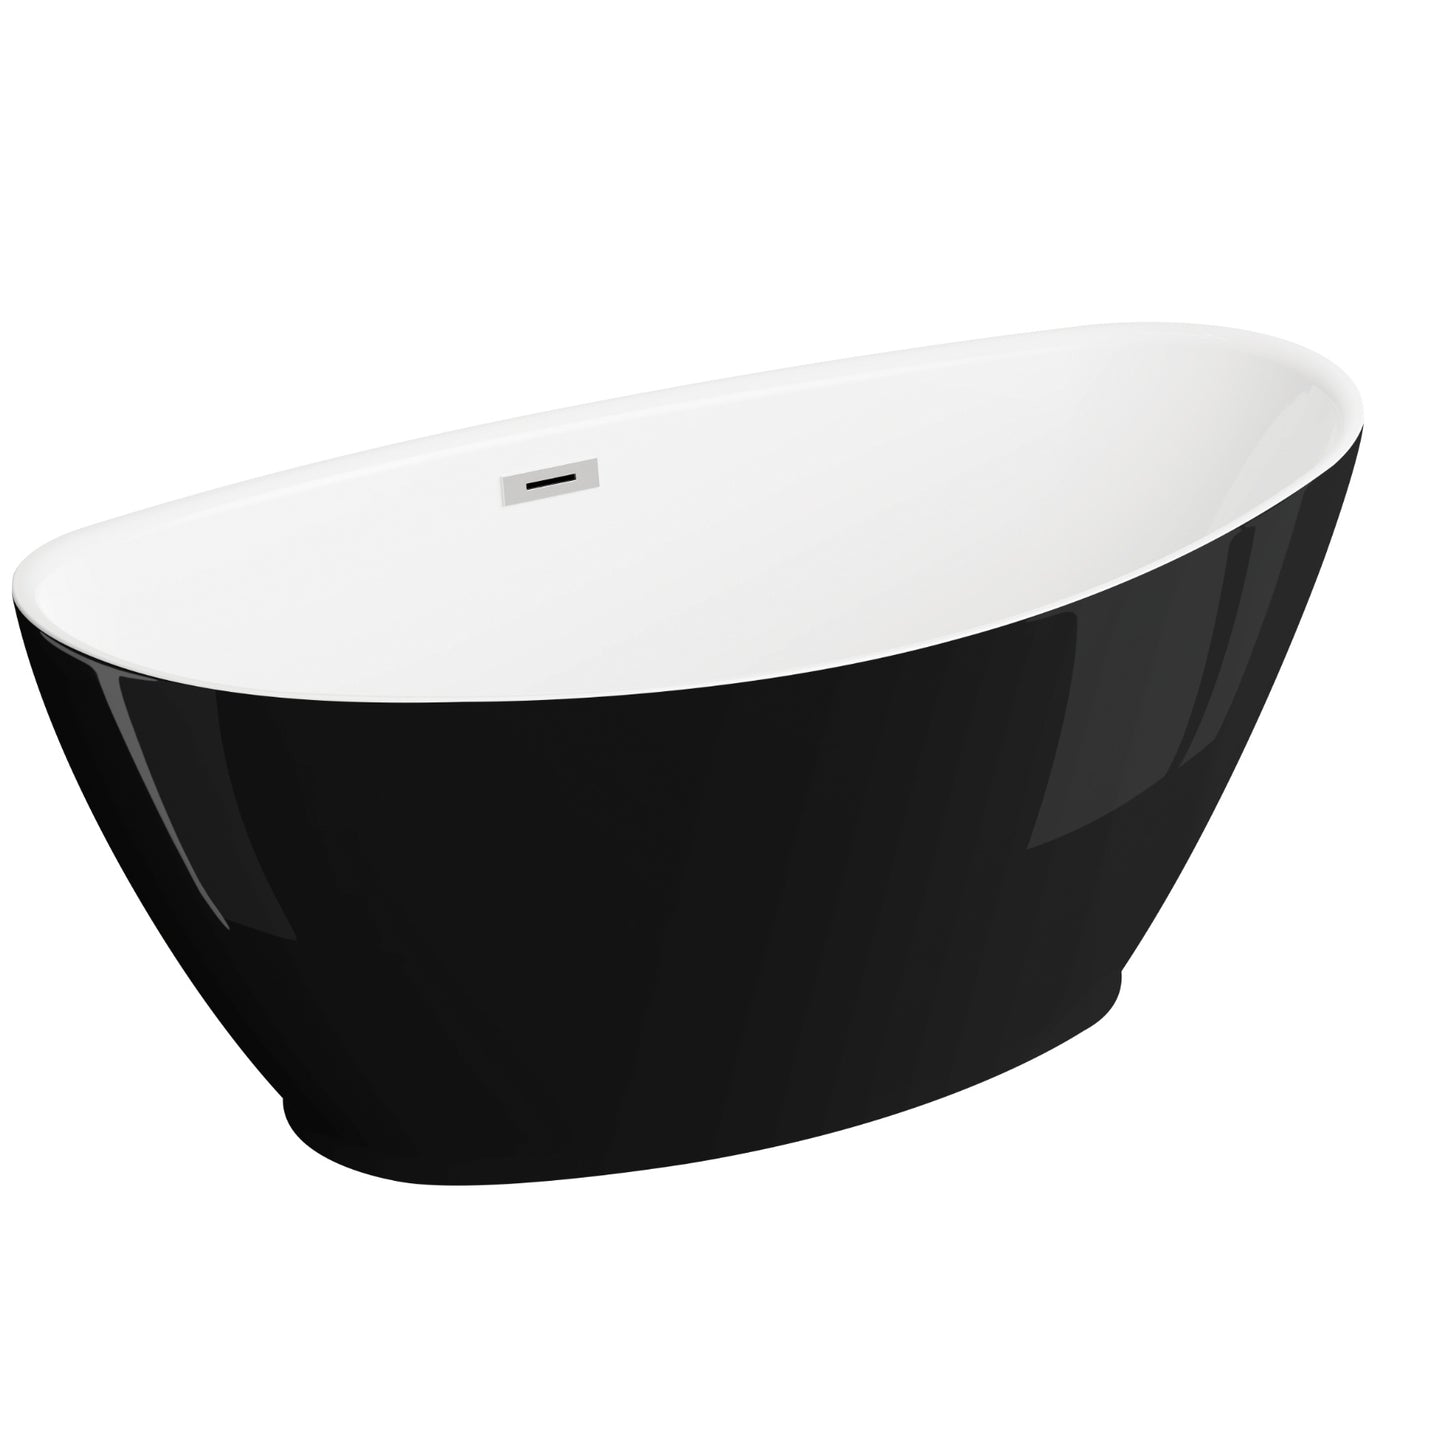 Load image into Gallery viewer, Acrylic freestanding bathtube MANGO 150 x 75 cm
